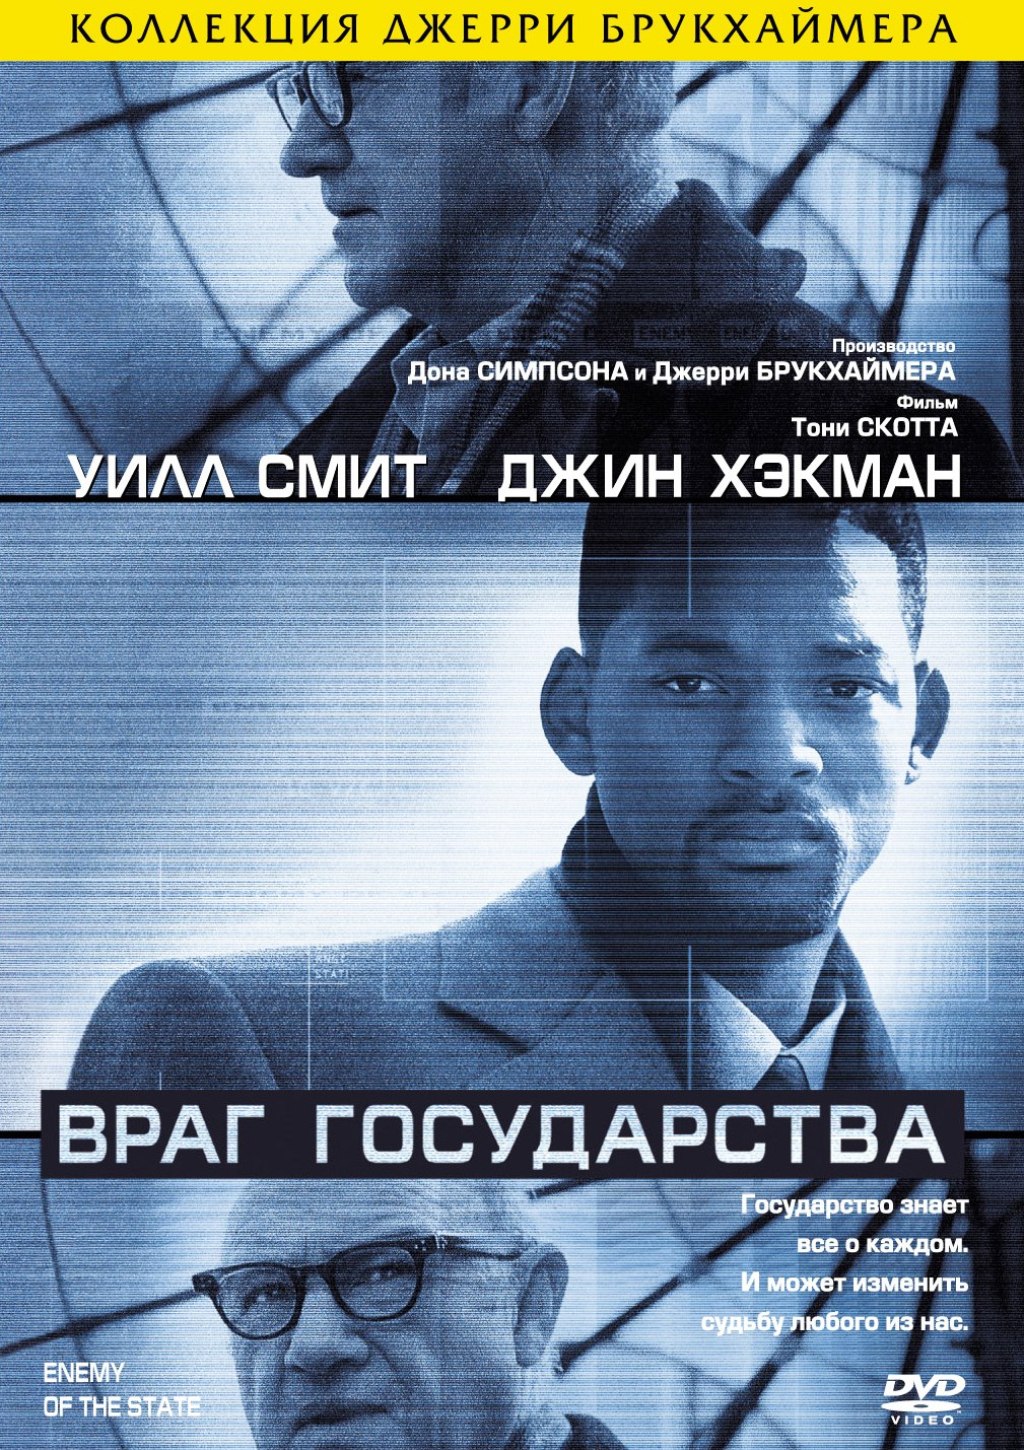 Враг государства (DVD)